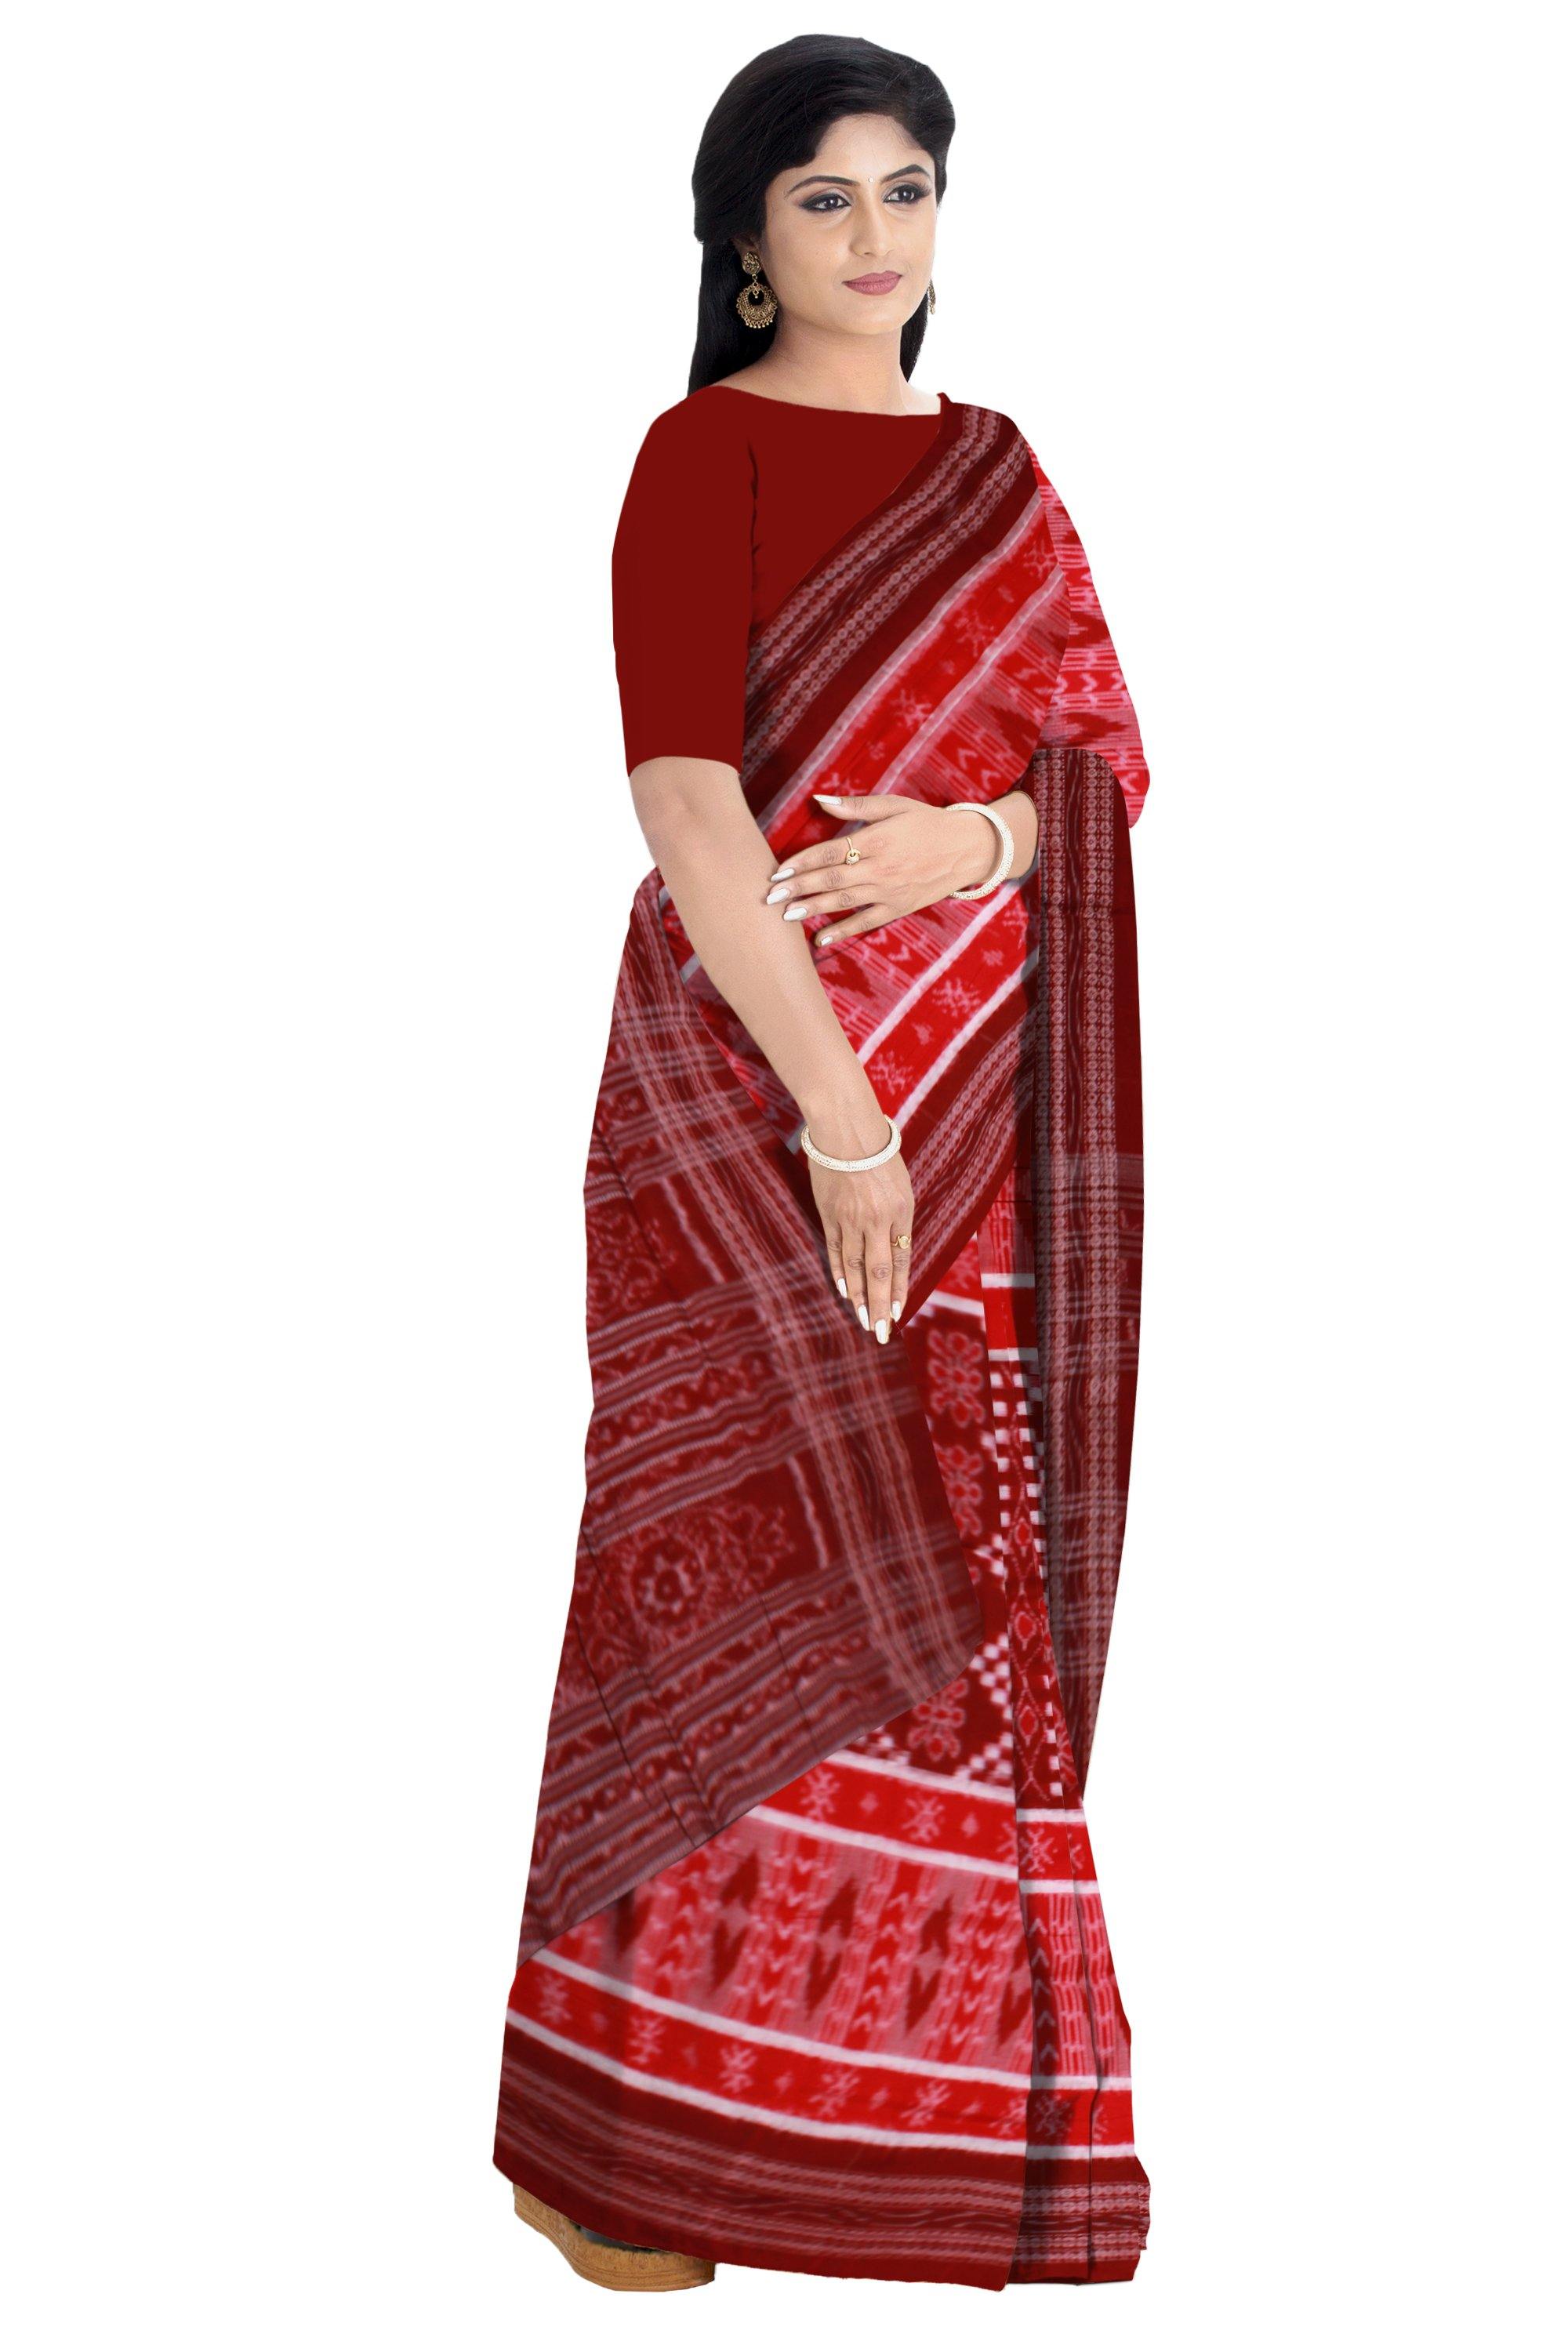 Pasapali Sapta Design Saree in Maroon color - Koshali Arts & Crafts Enterprise